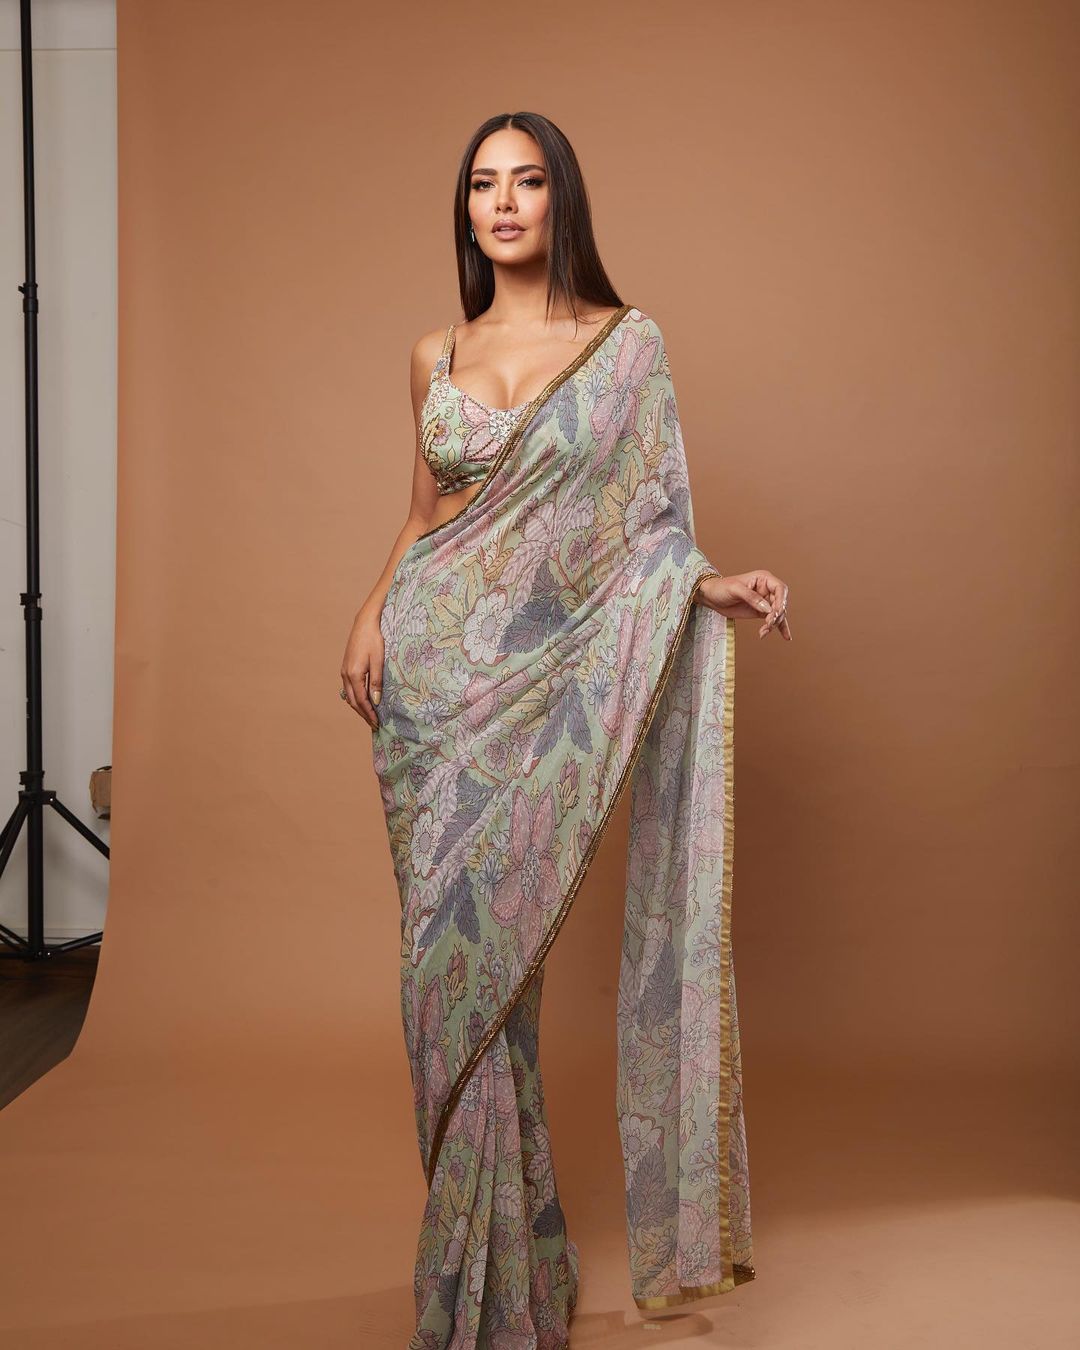 Esha Gupta looks breathtaking in the pastel-coloured printed saree